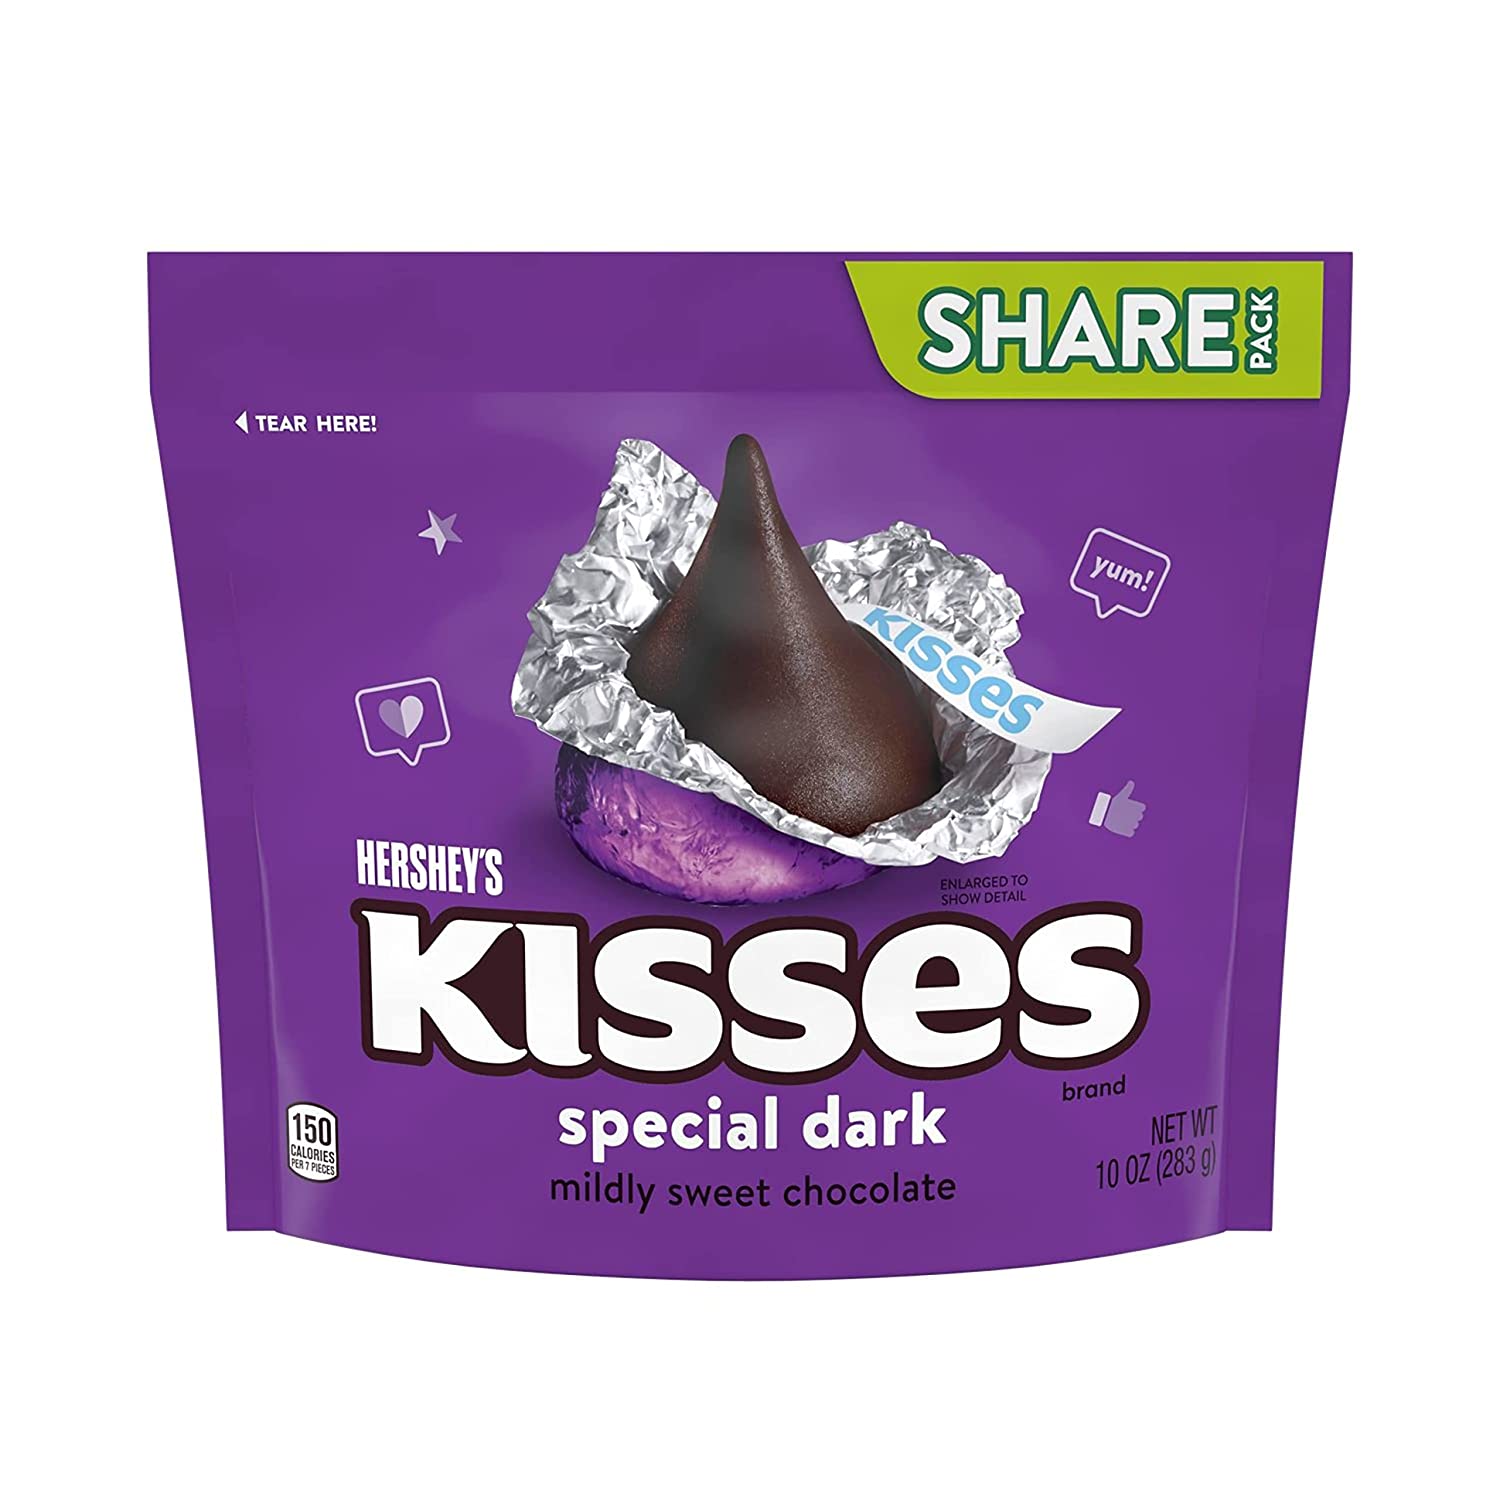 Socola Hershey s Kisses Special Dark 283g share pack.